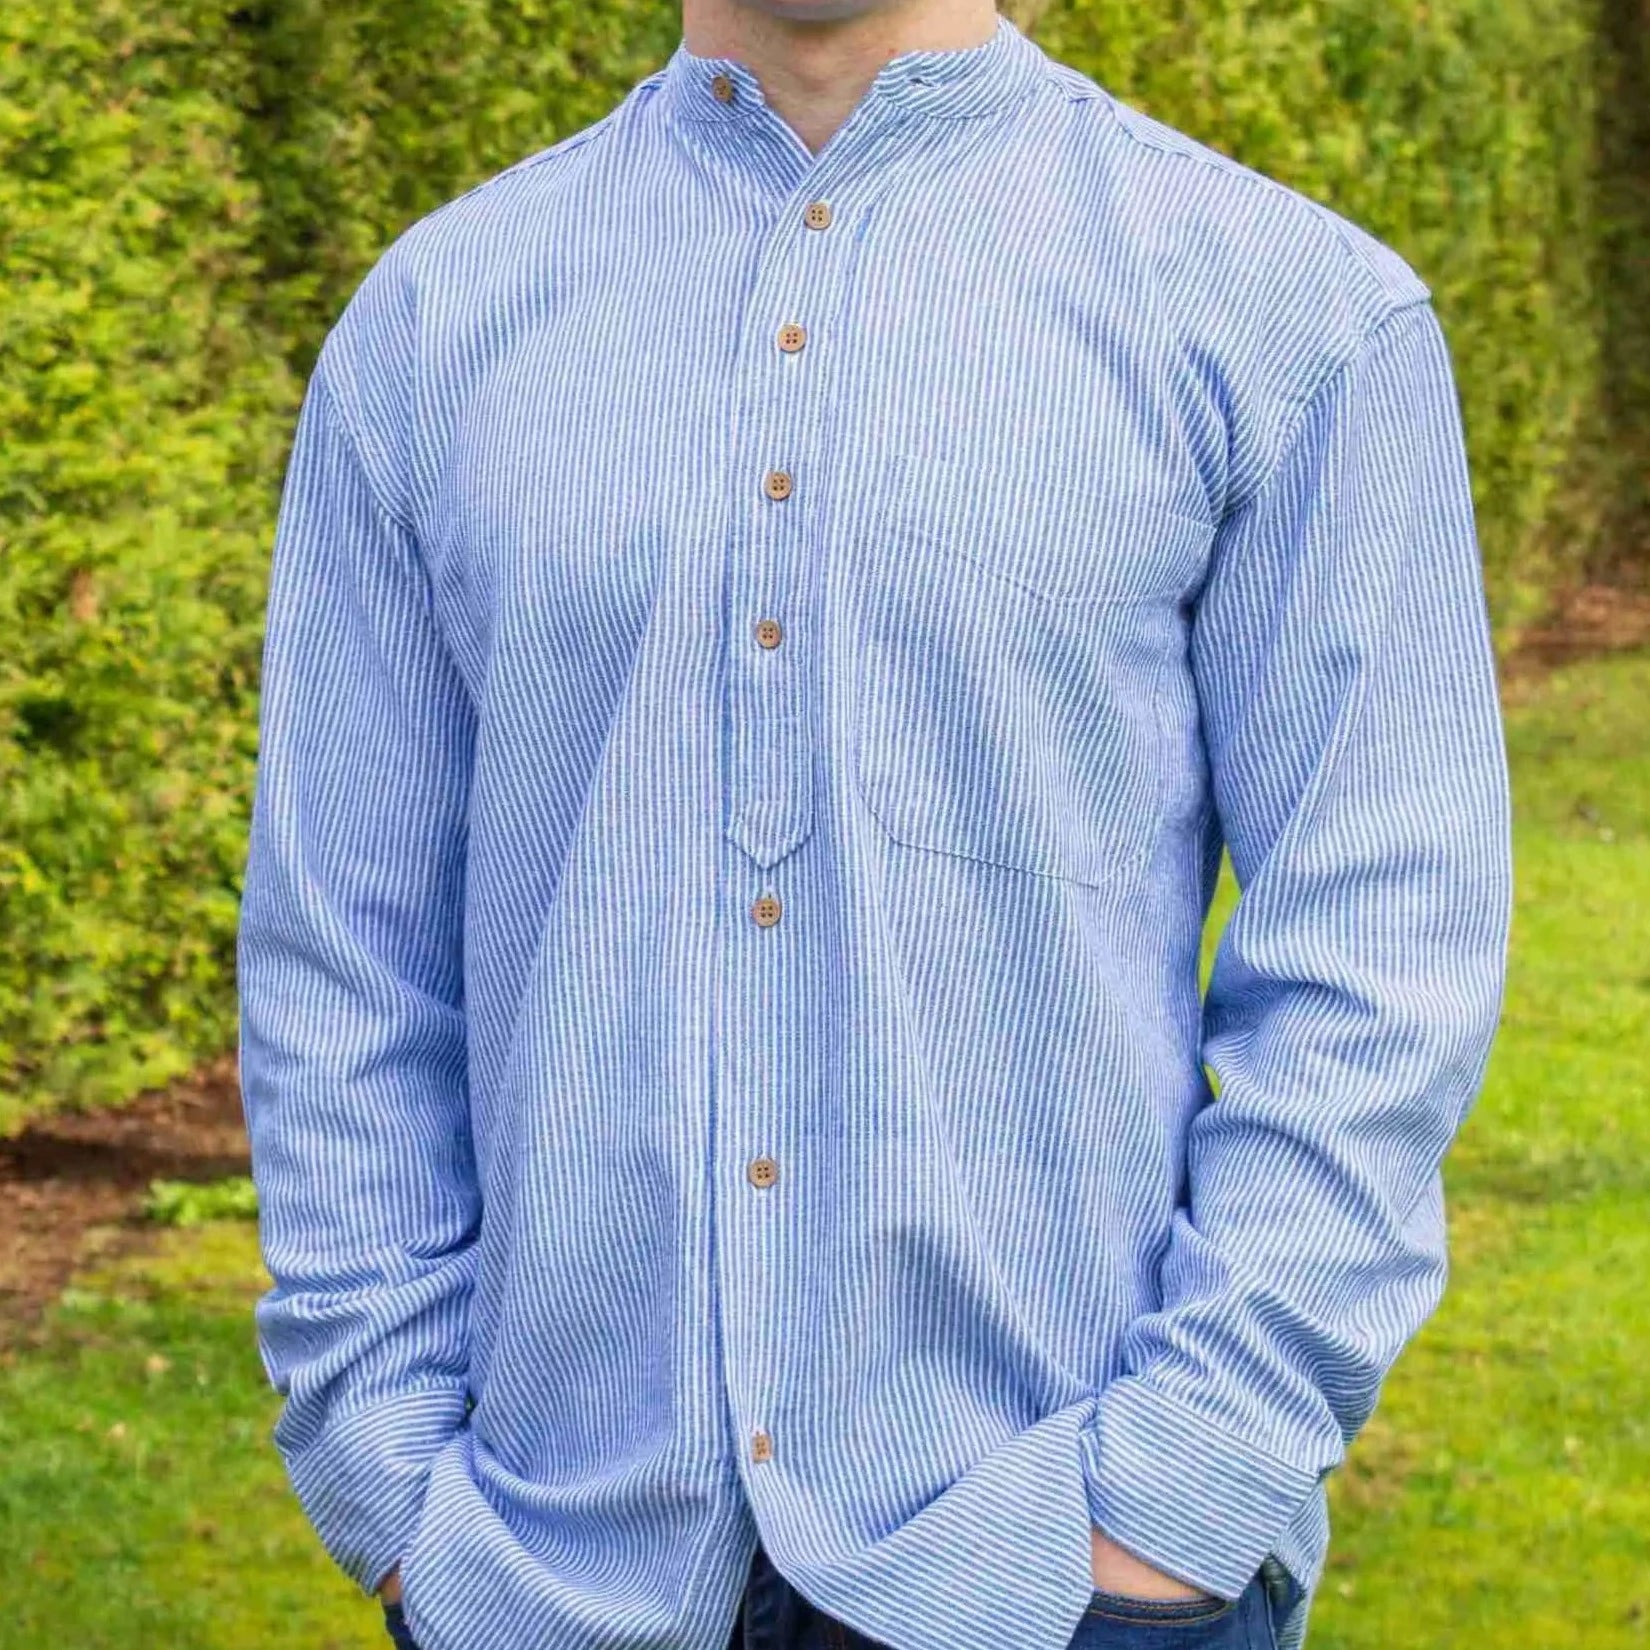 Irish Grandfather Shirt with Blue and White Stripes